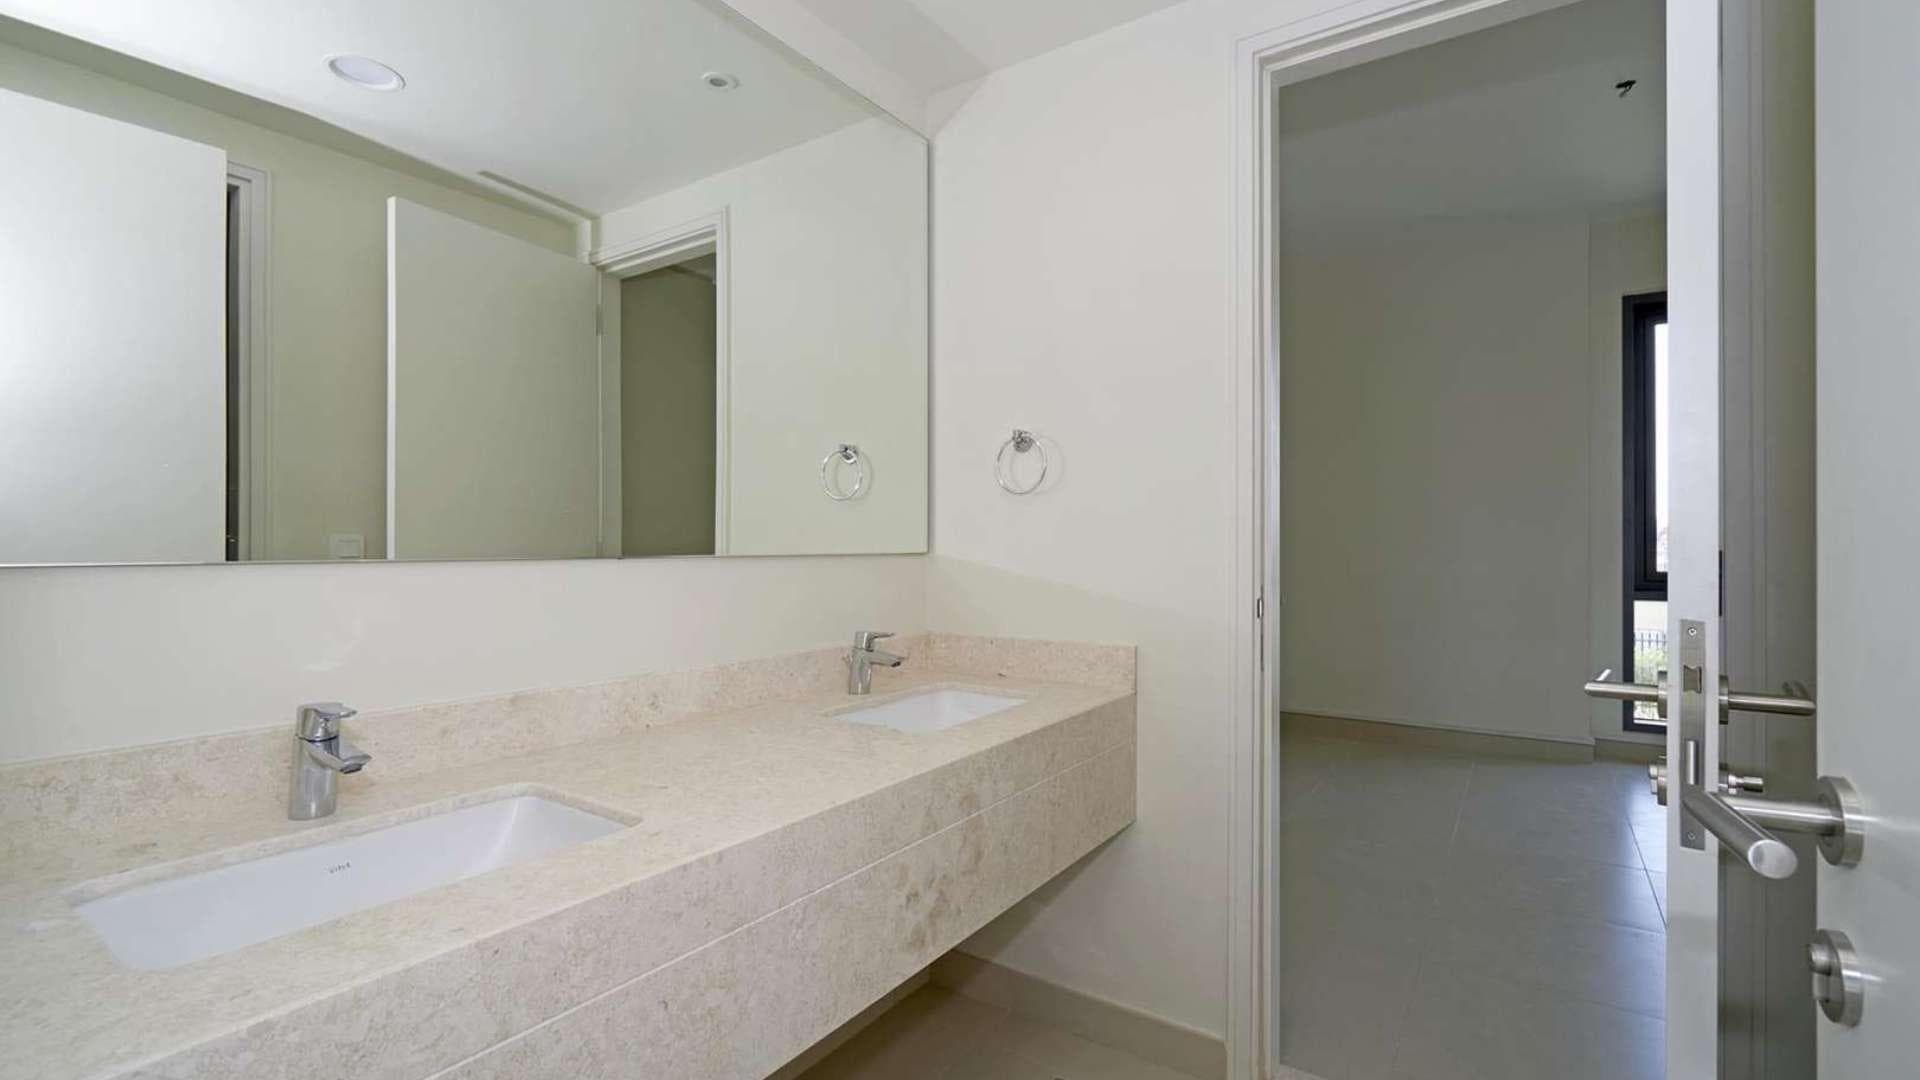 4 Bedroom Villa For Rent Maple At Dubai Hills Estate Lp37569 1be96e029dce1e00.jpg